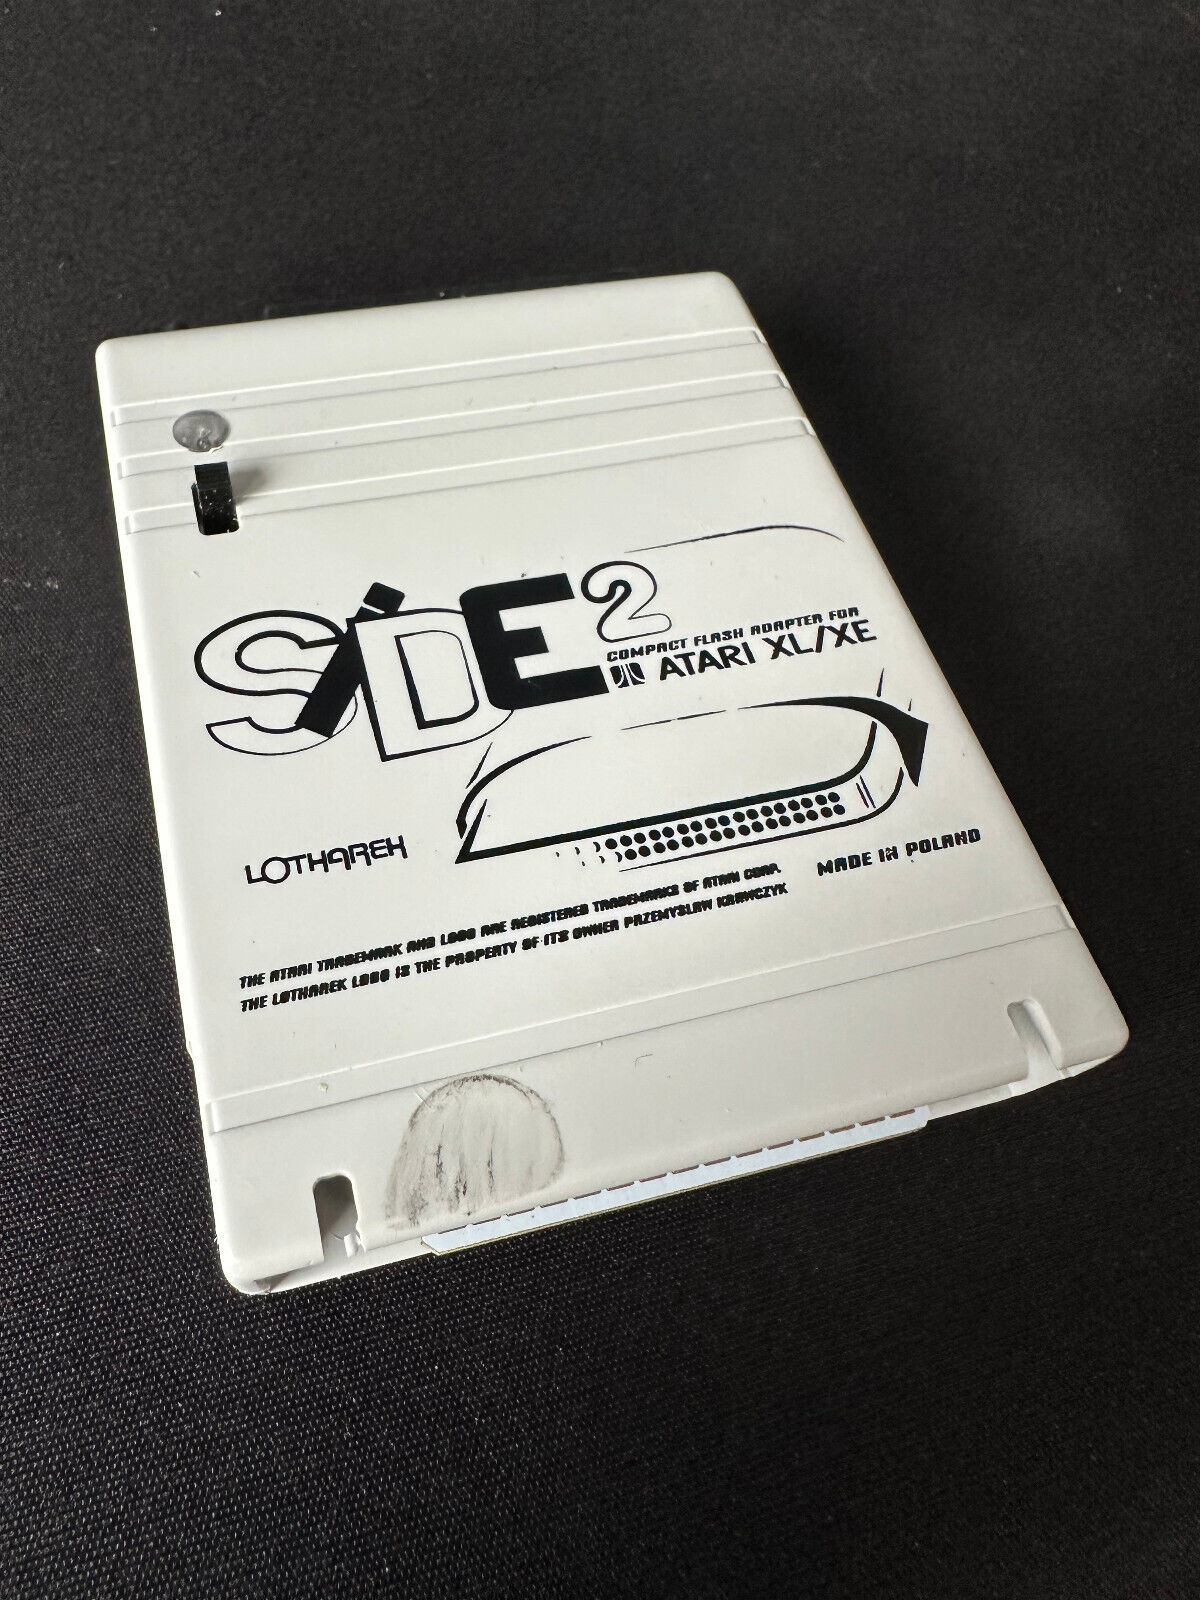 SIDE2 cartridge for Atari XL/XE computers